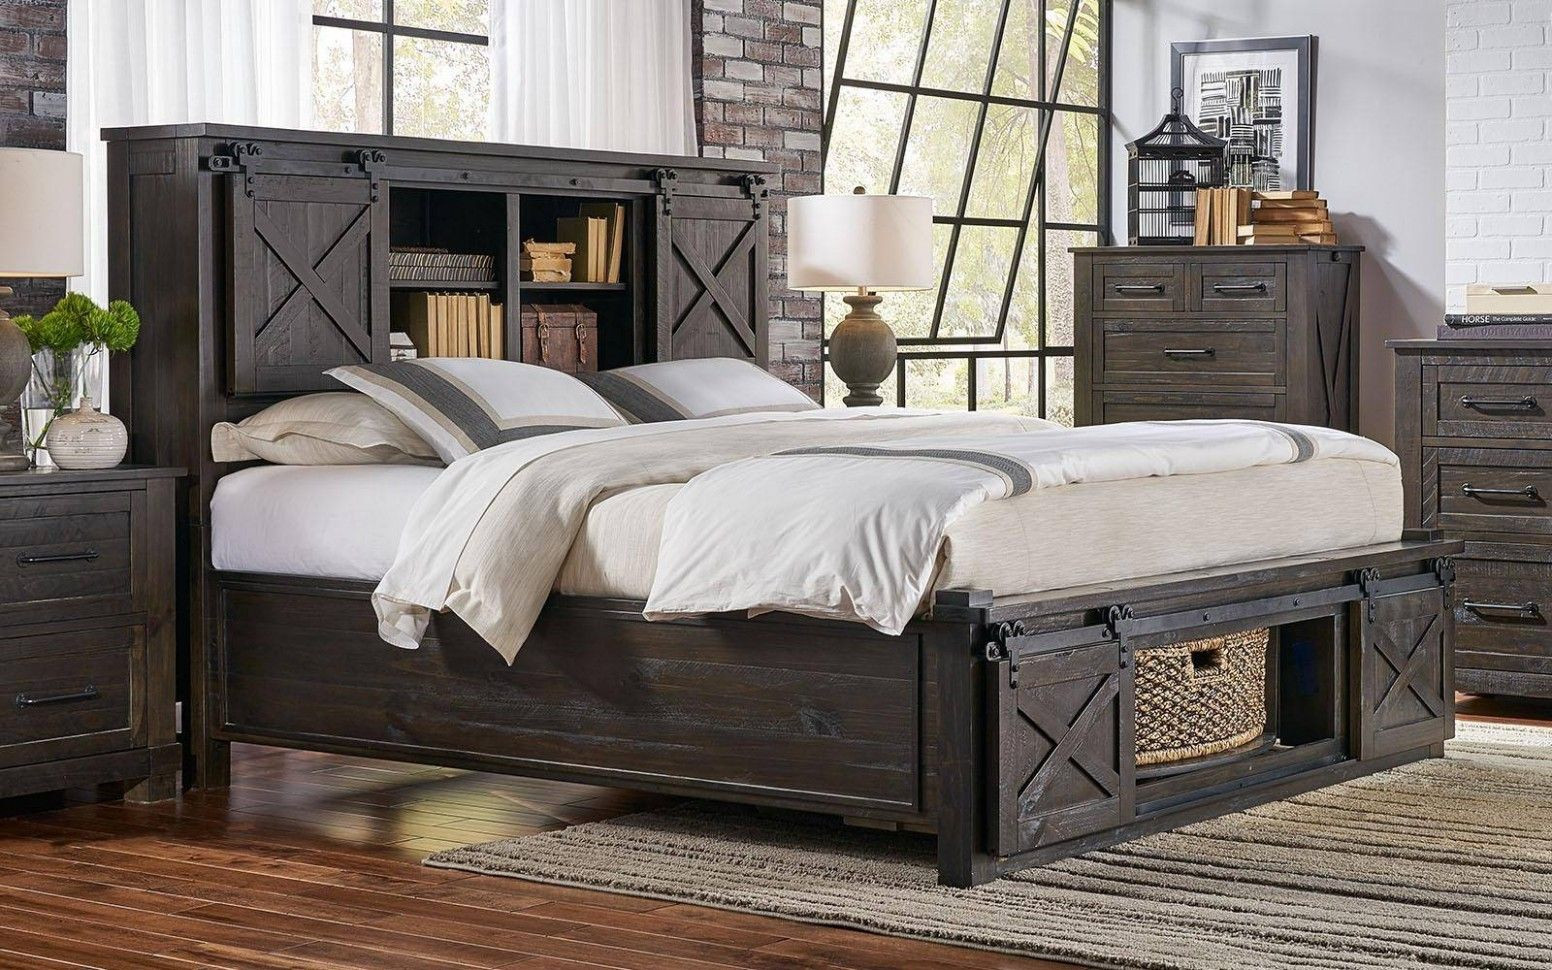 Rustic King Size Bedroom Sets
 